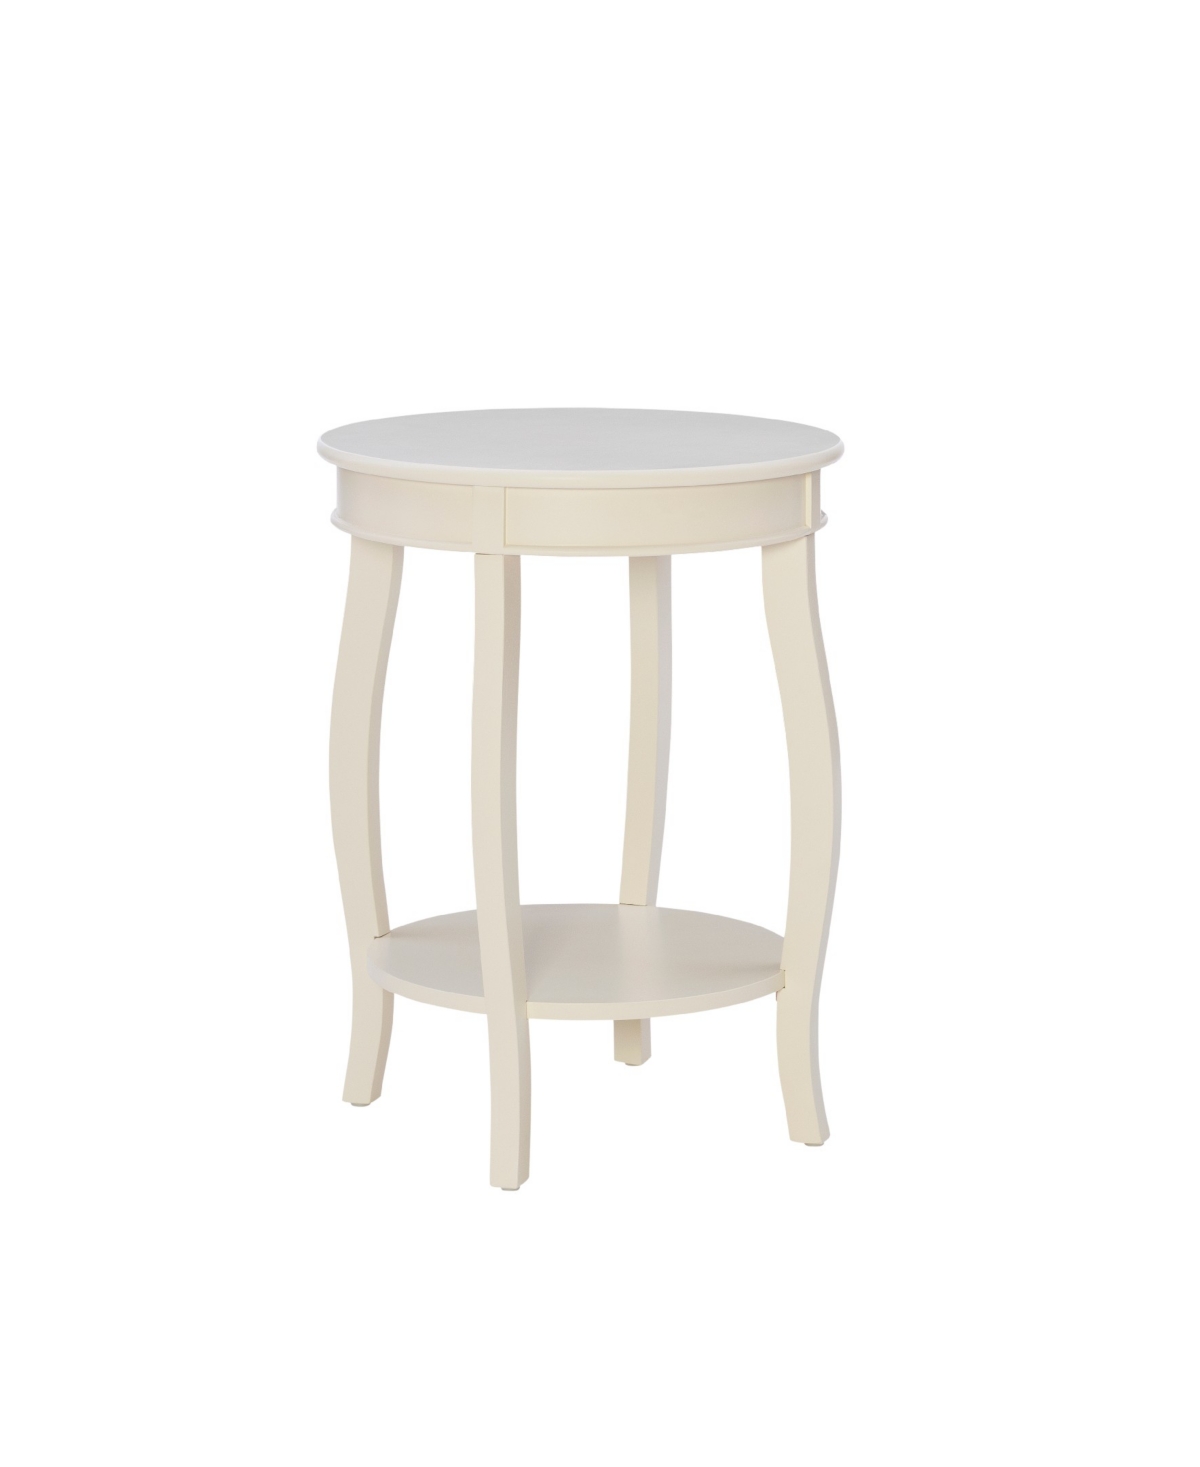 Linon Home Decor Powell Furniture Andover Round Side Table In White